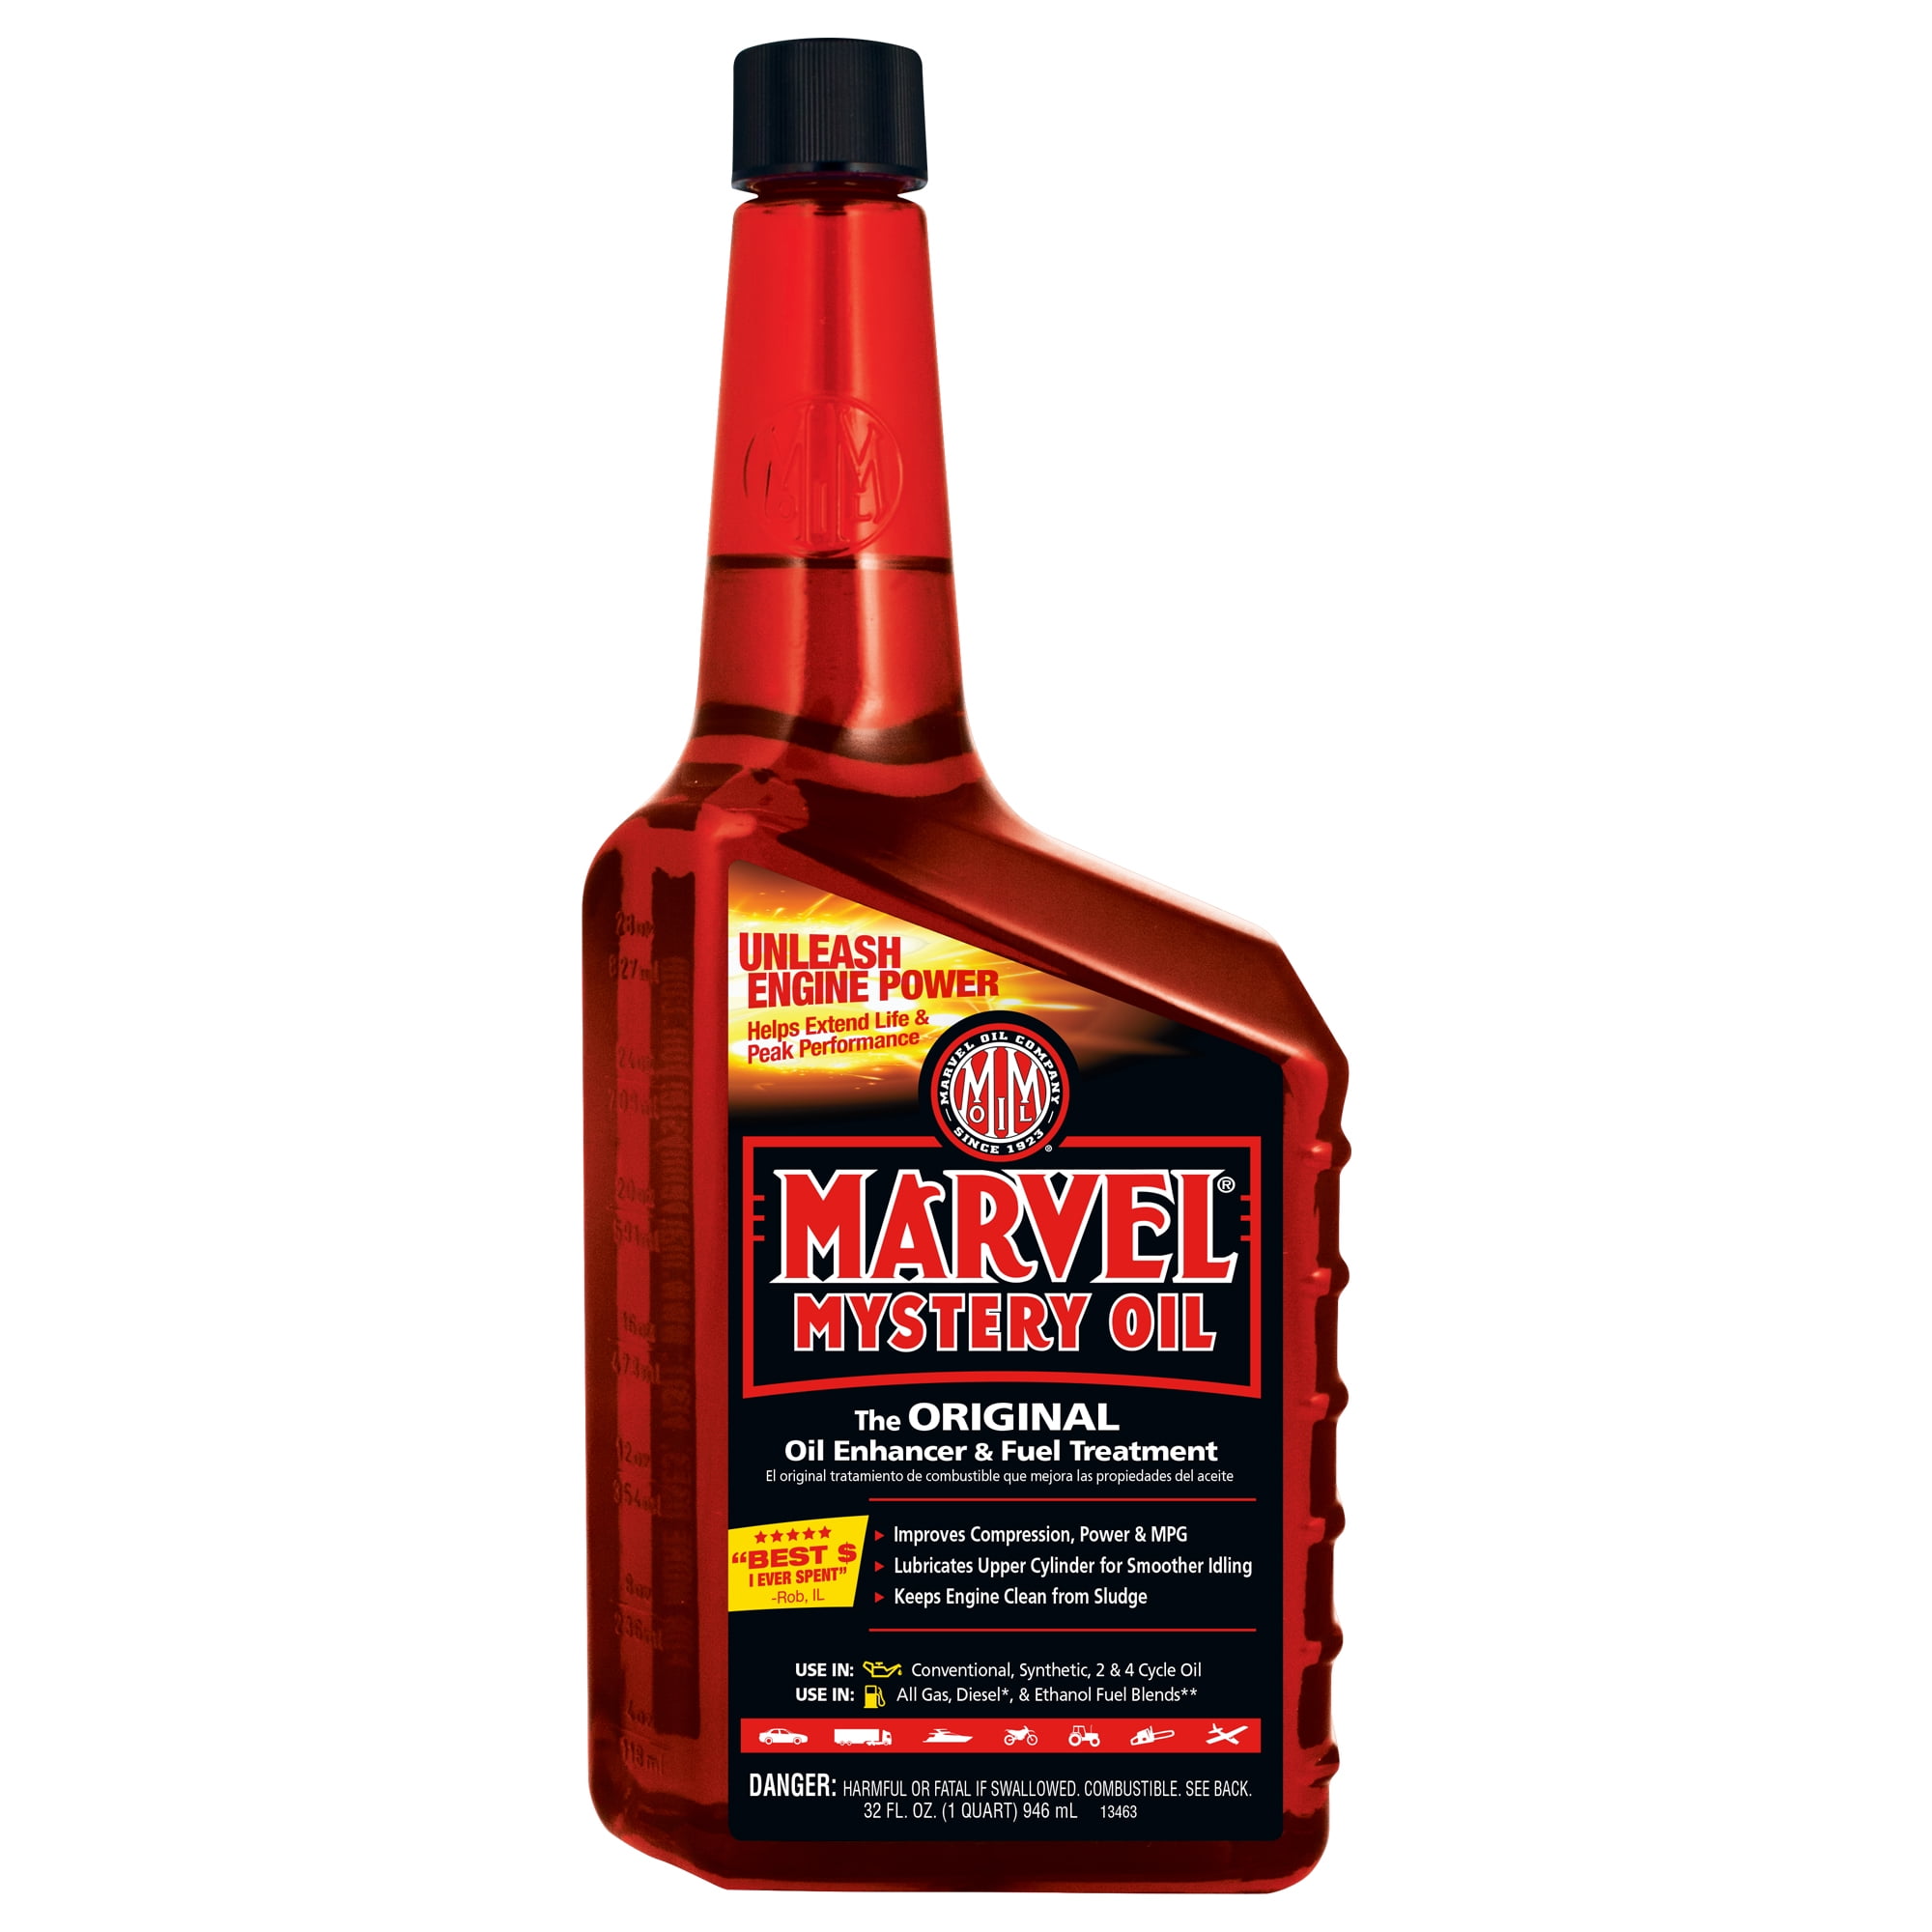 Marvel Mystery Oil Oil Enhancer and Fuel Treatment 32